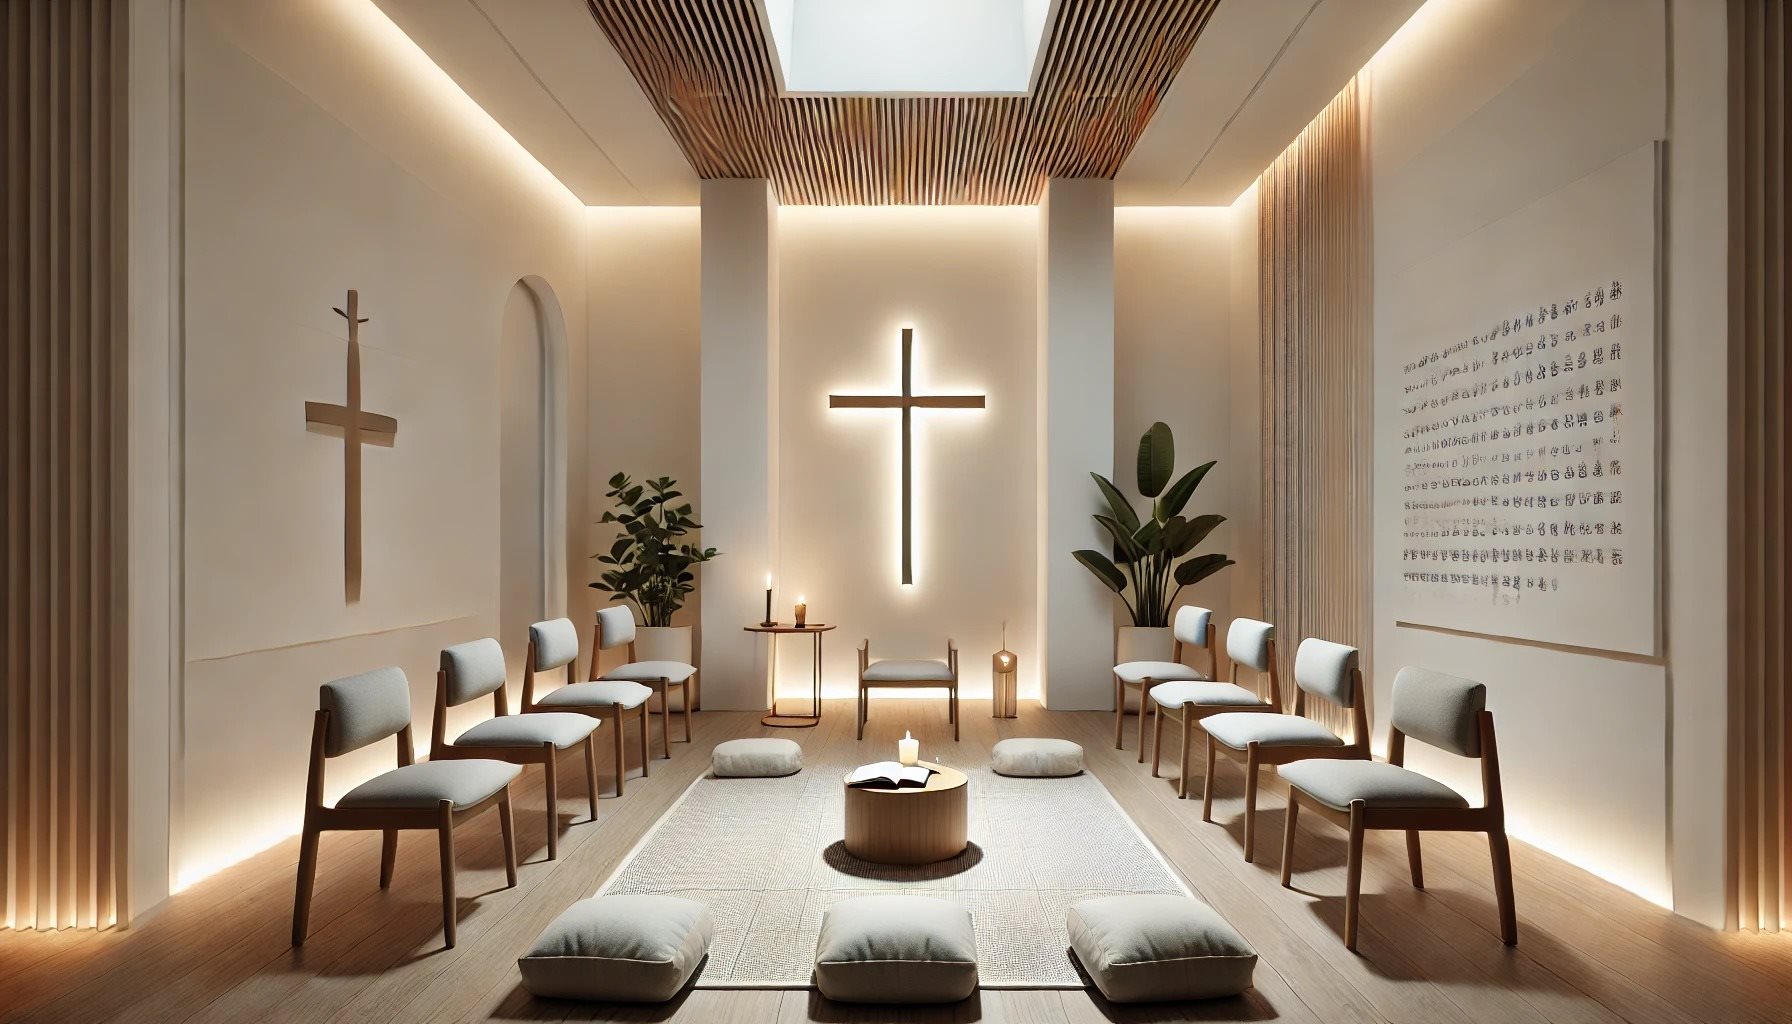 15 Church Prayer Room Ideas